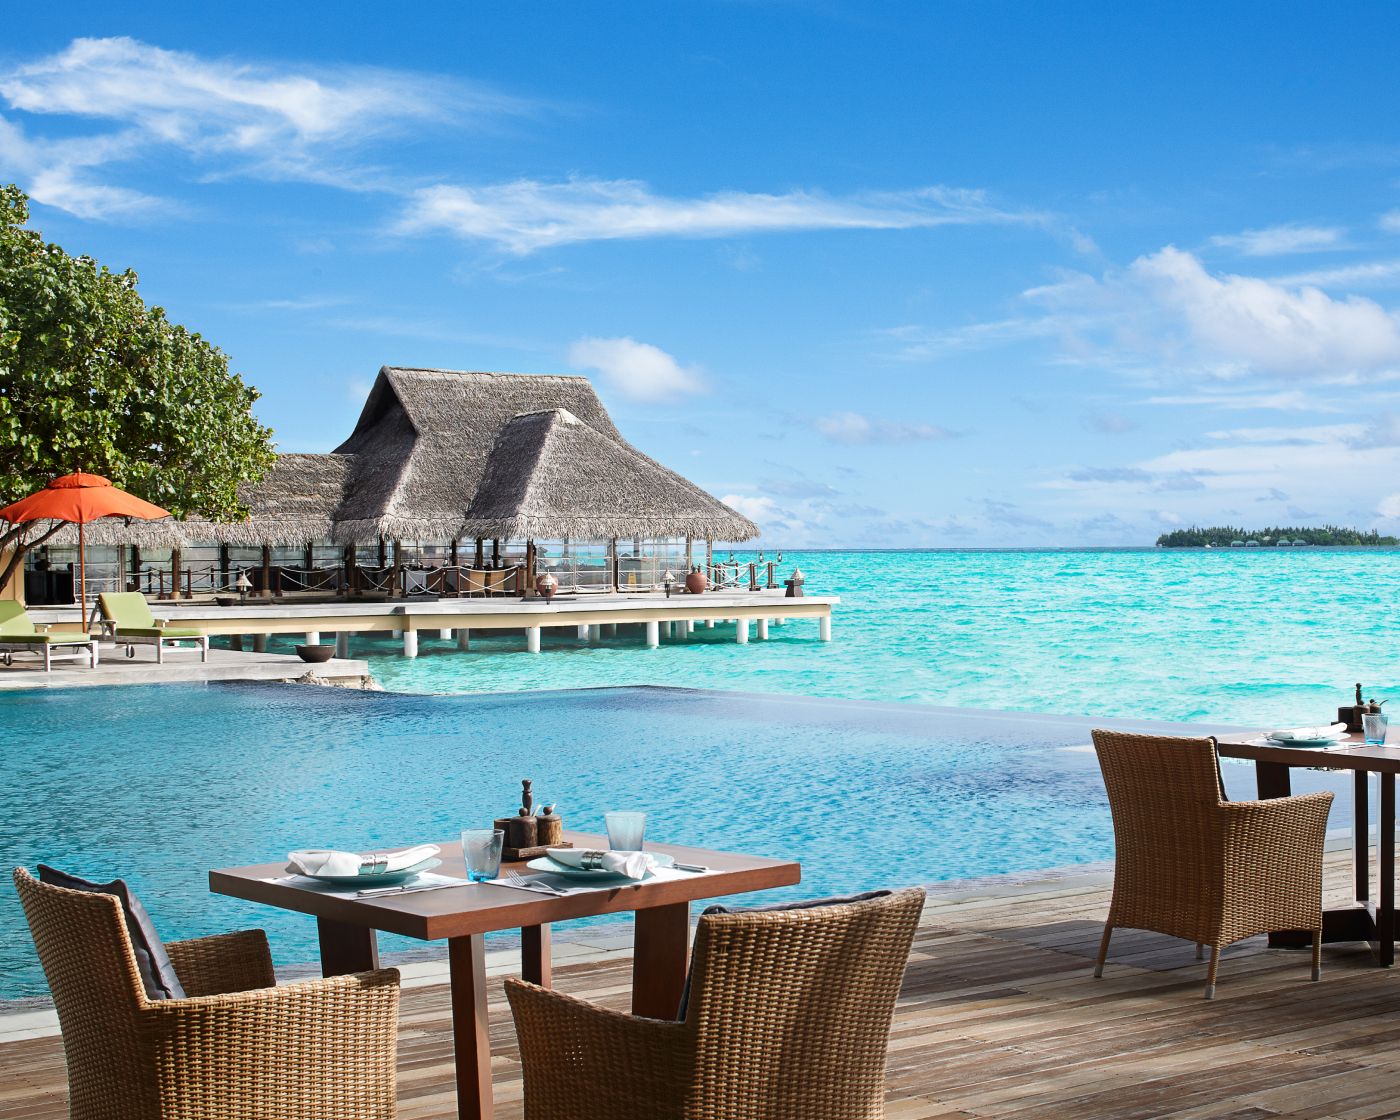 Poolside Bar And Restaurant - Dining at Taj Exotica, Maldives